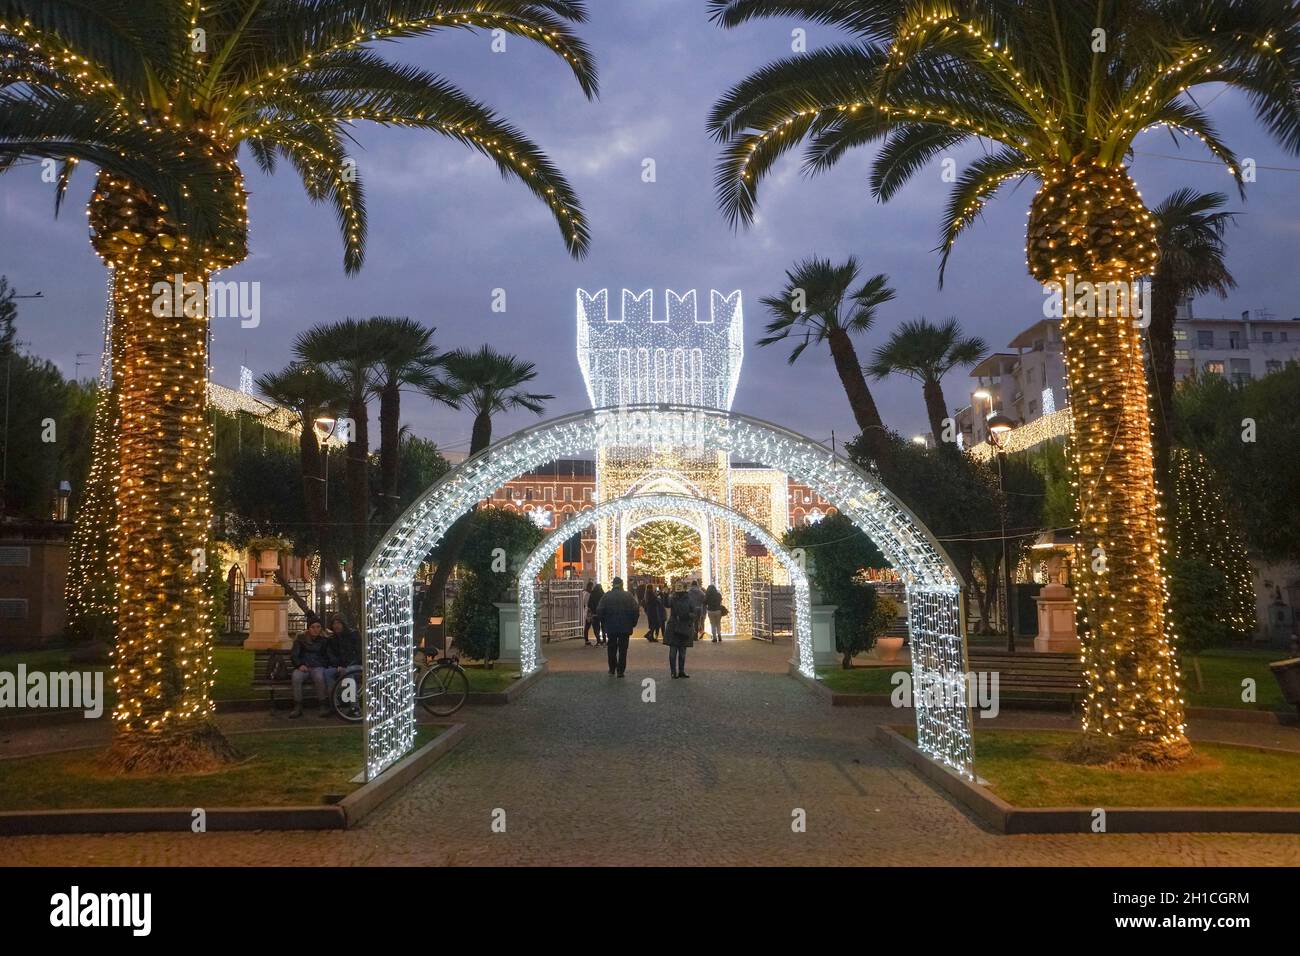 Christmas illuminations, Public Gardens, People, Civitanova Marche, Marche, Italy, Europe Stock Photo